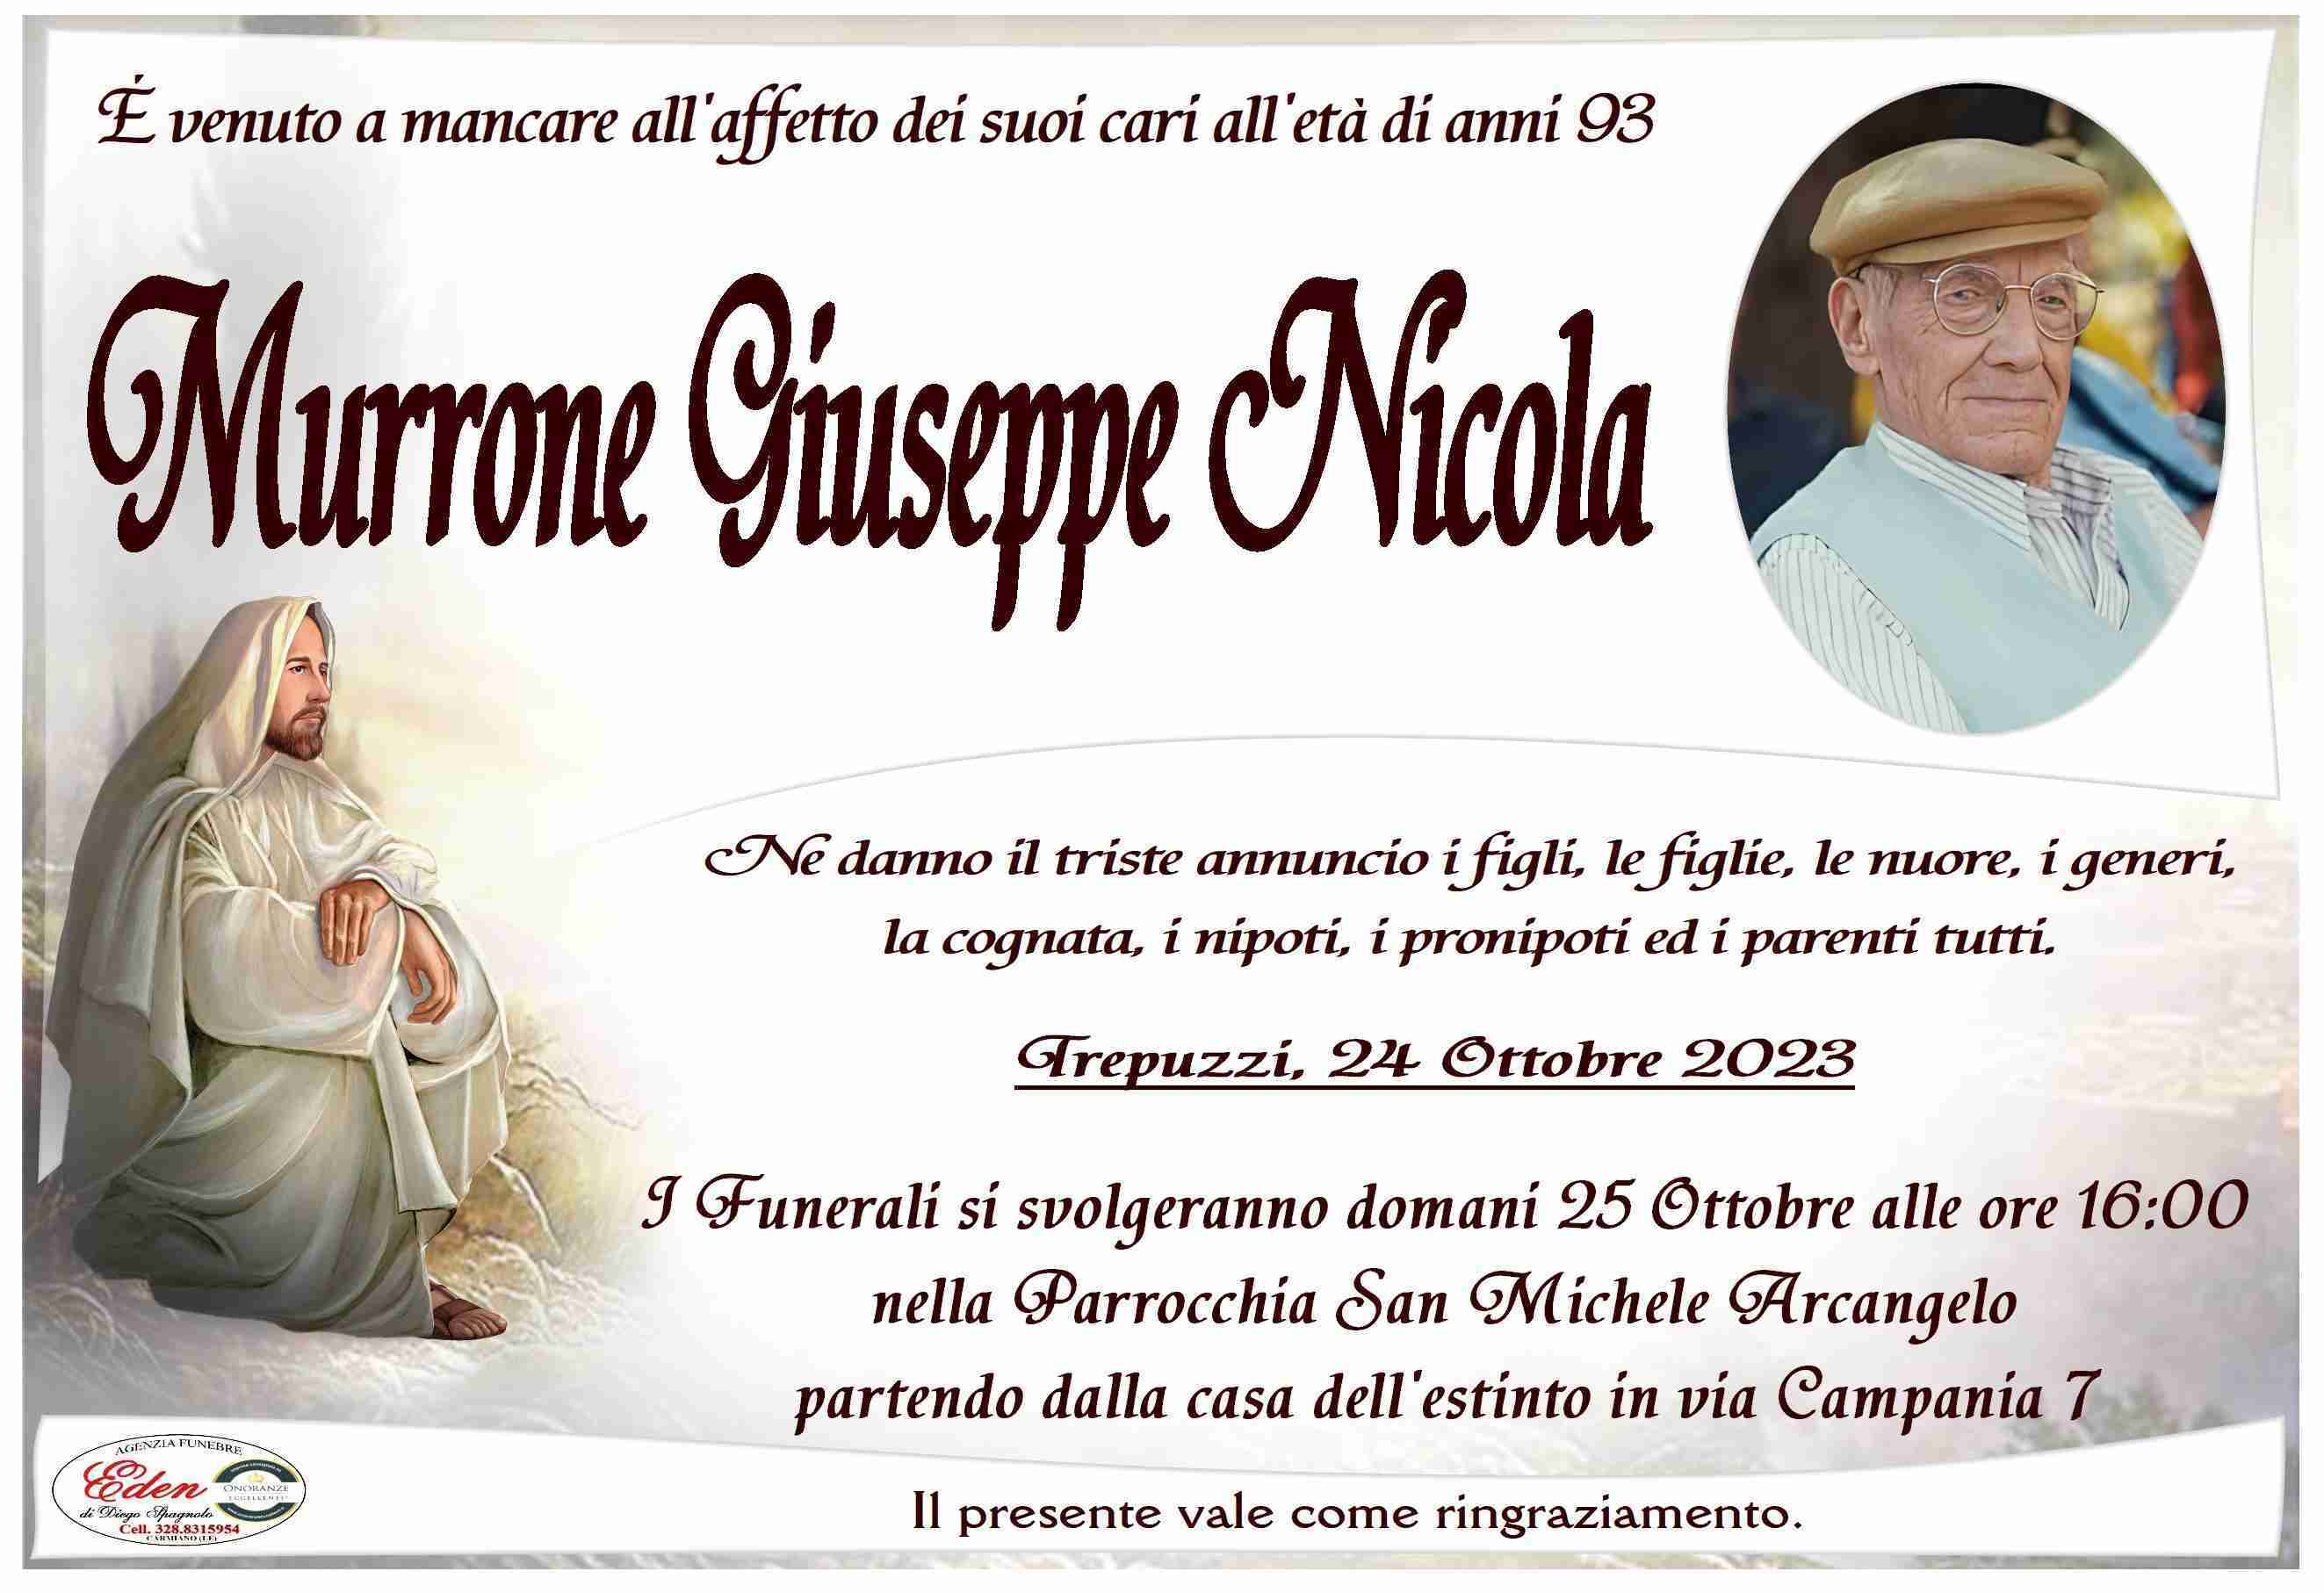 Giuseppe Nicola Murrone